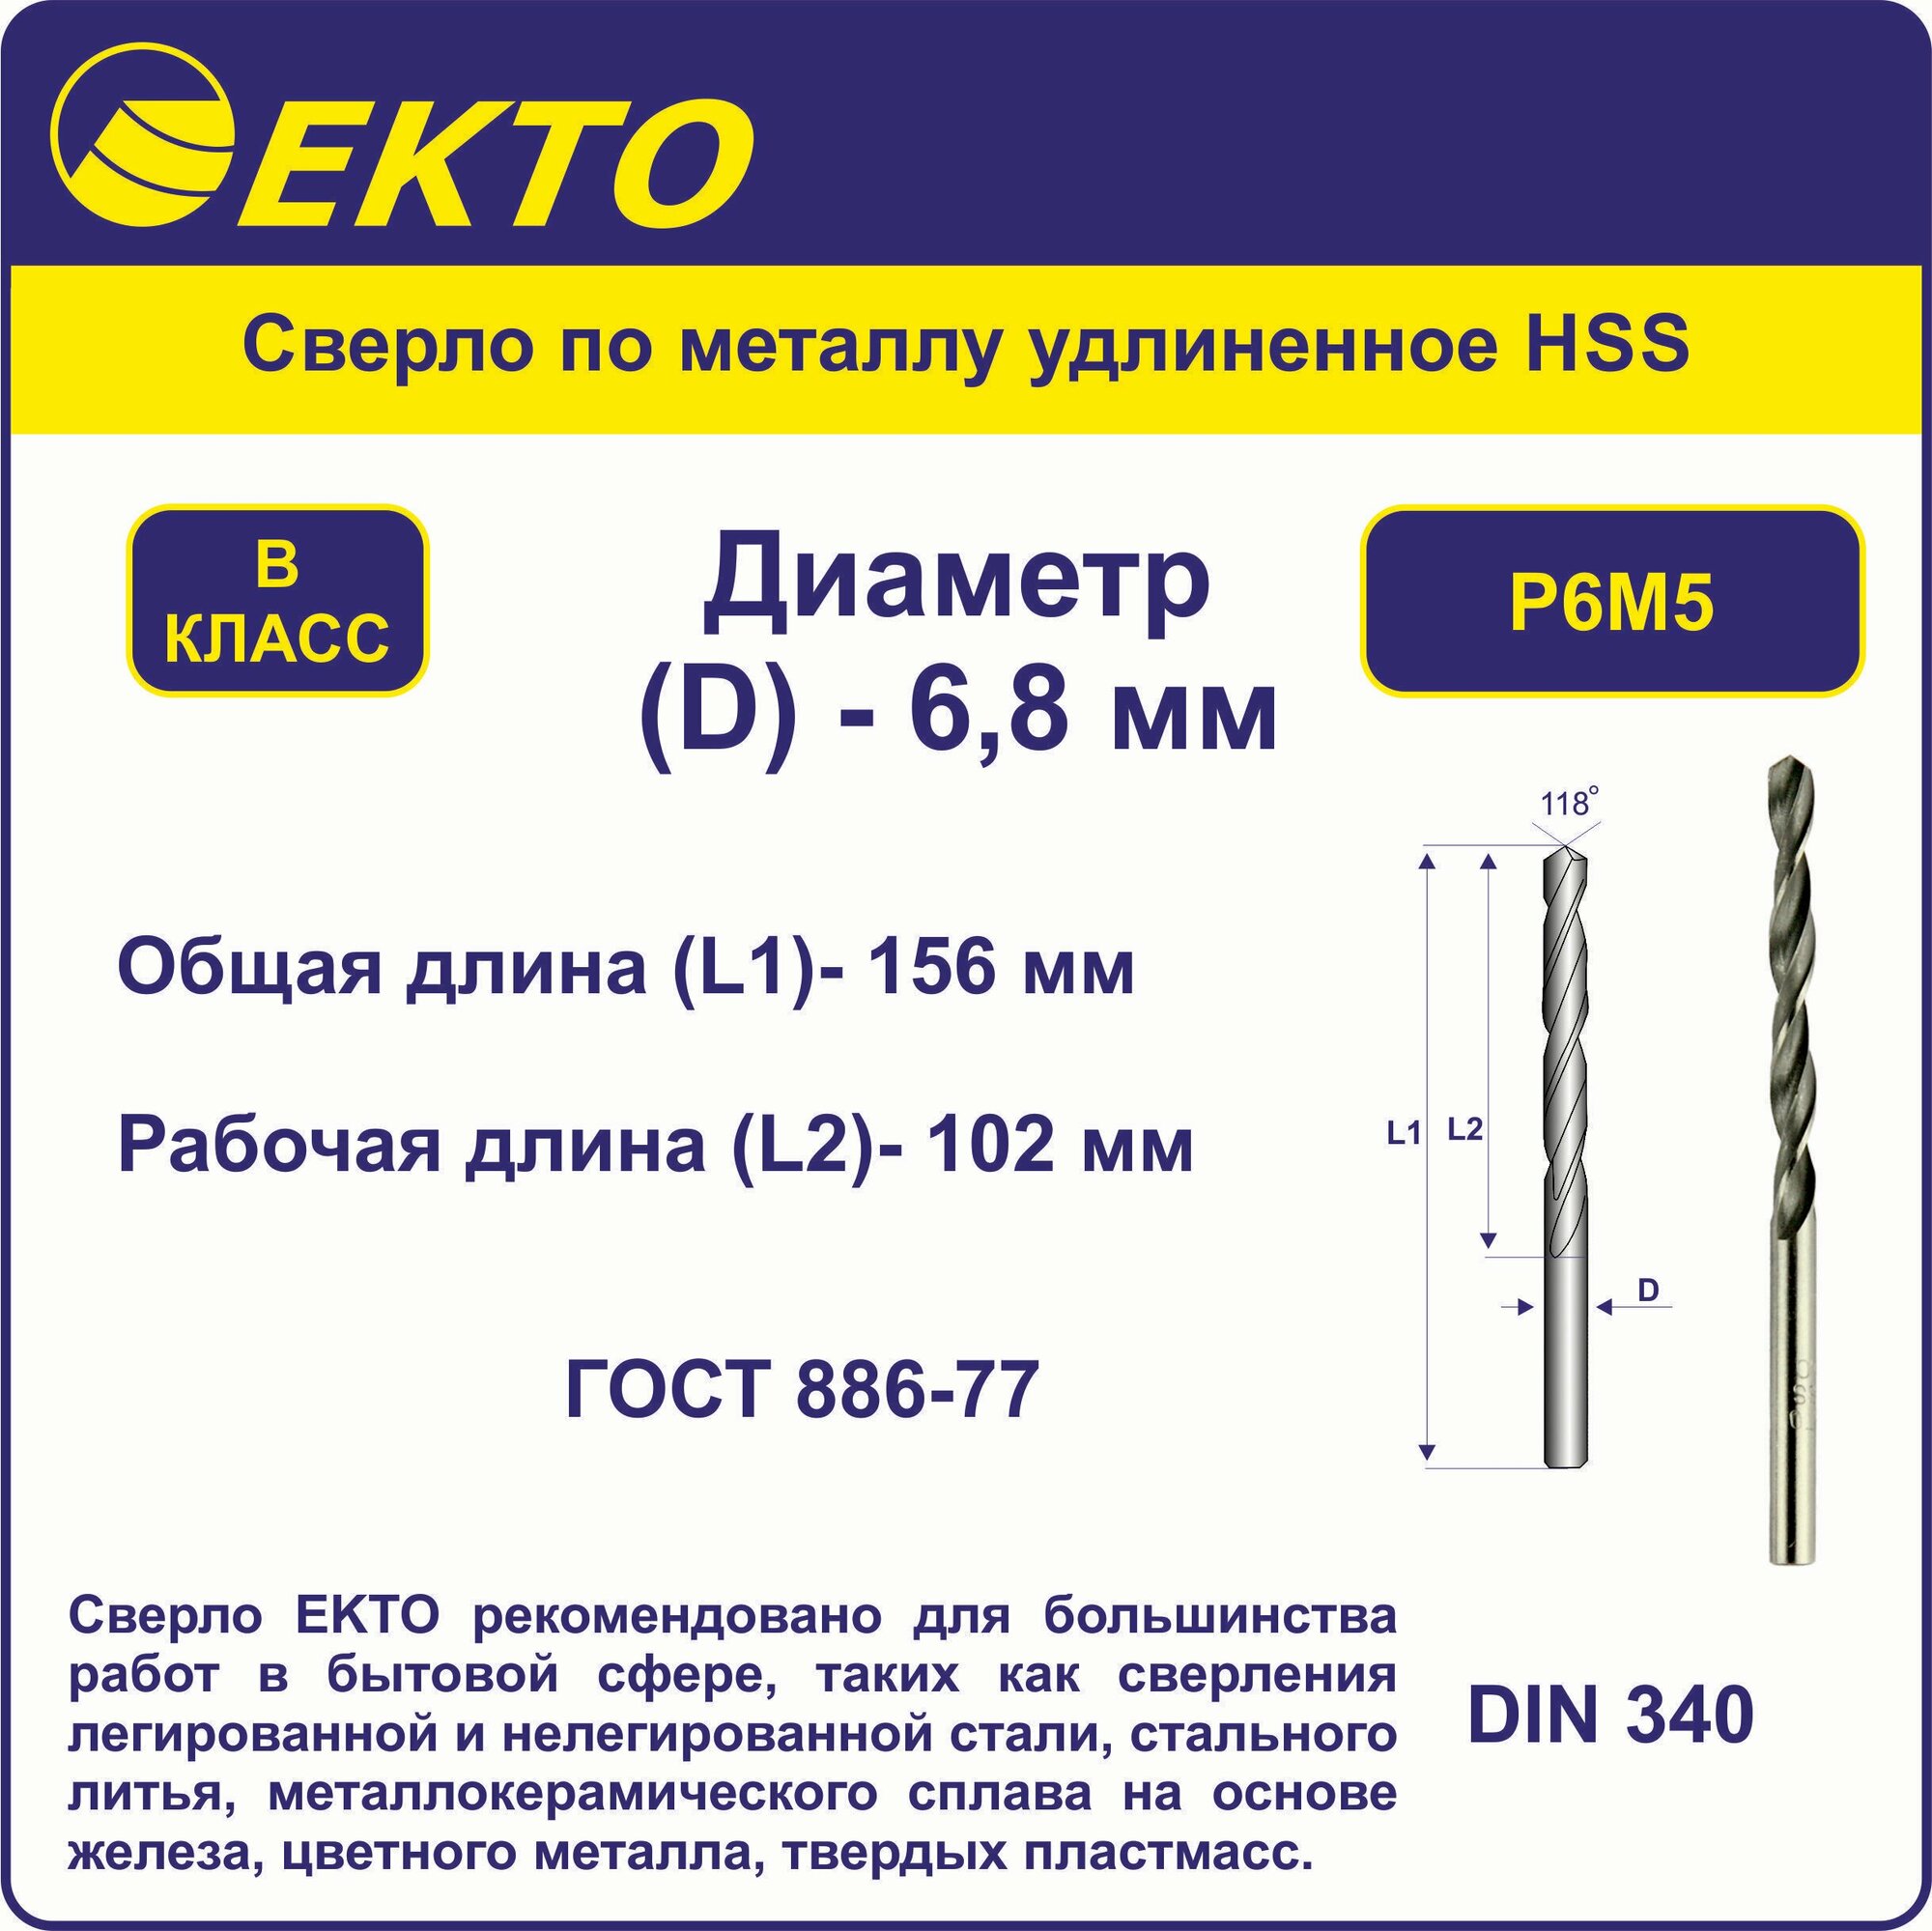 Сверло по металлу удлинённое HSS 6,8 мм цилиндрический хвостовик EKTO